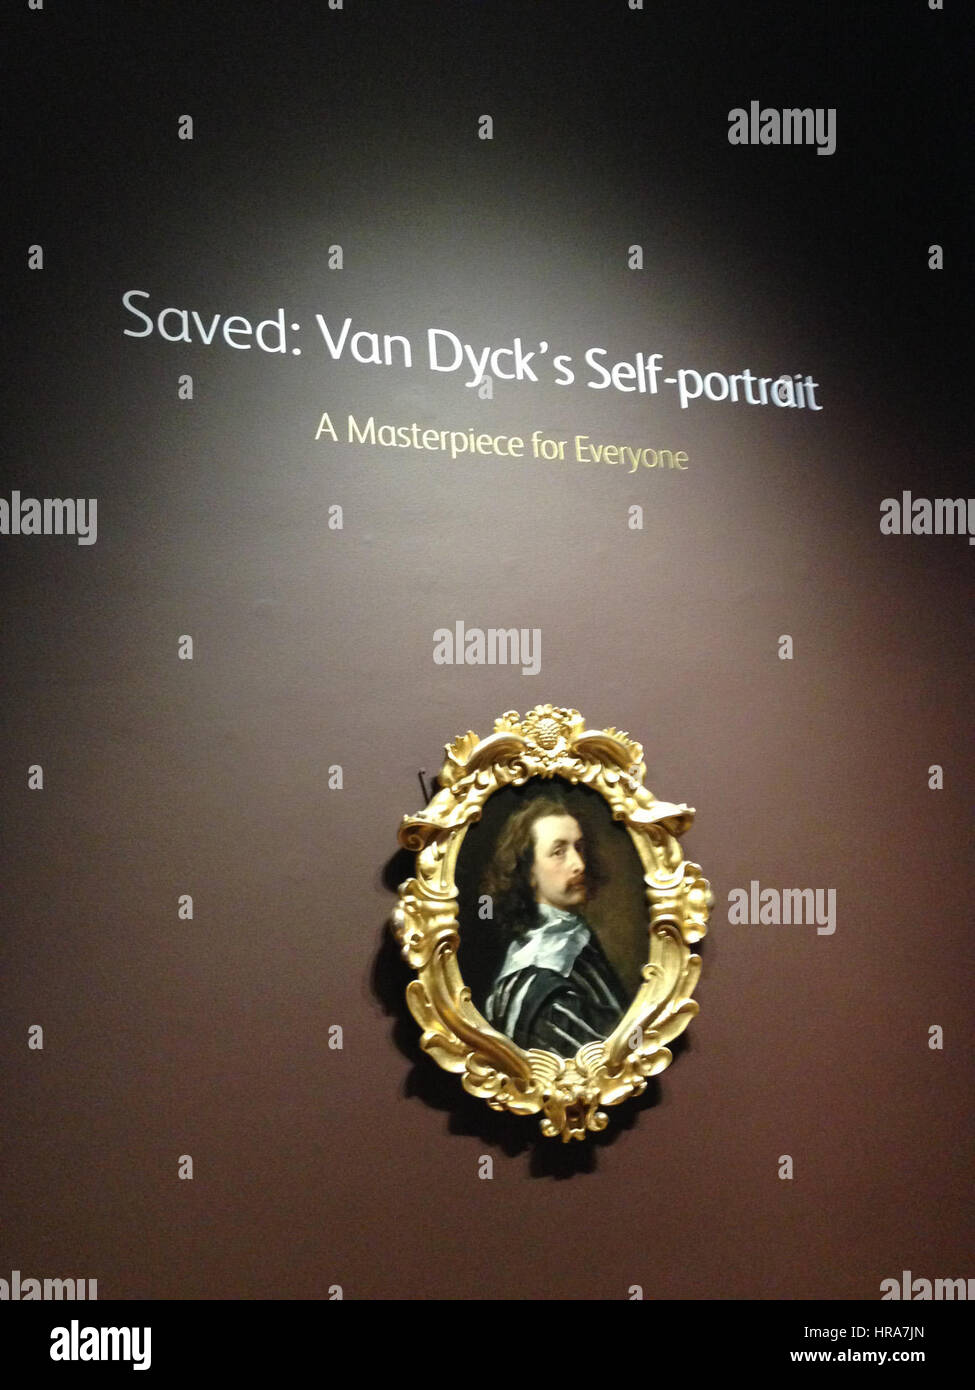 Sir Anthony van Dyck (c 1640) by Anthony van Dyck, National Portrait Gallery, London, UK - 20140628-02 Stock Photo